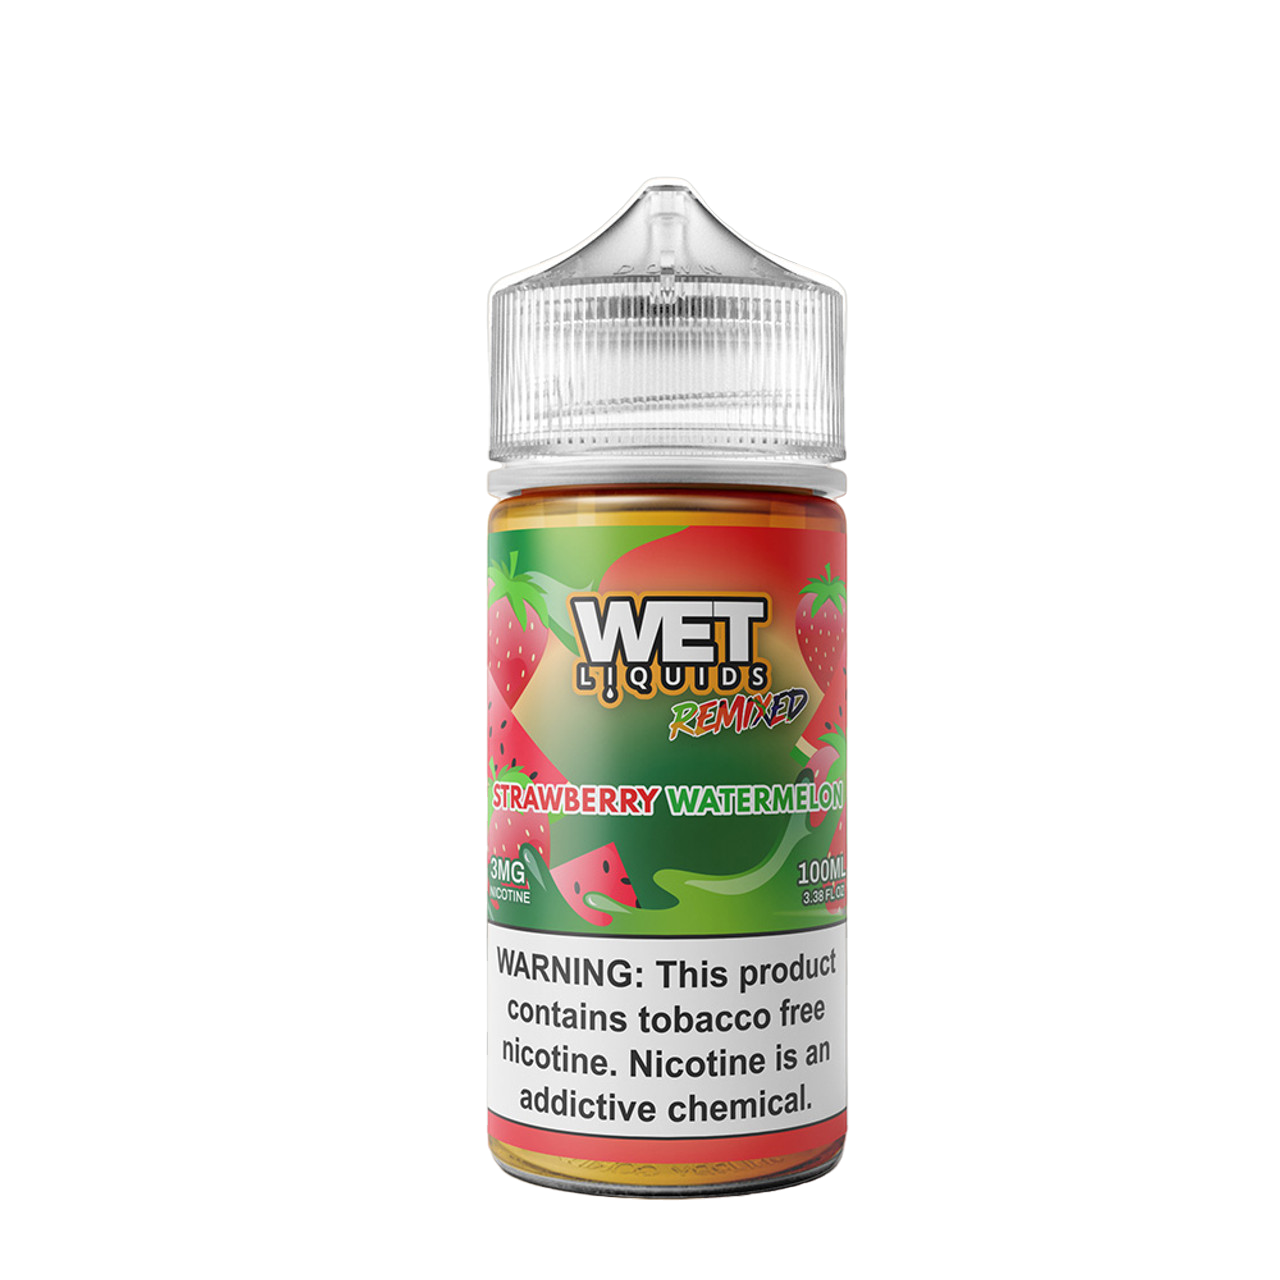 Wet Liquids Remixed Synthetic Nicotine E-Liquid 100ML Strawberry Watermelon